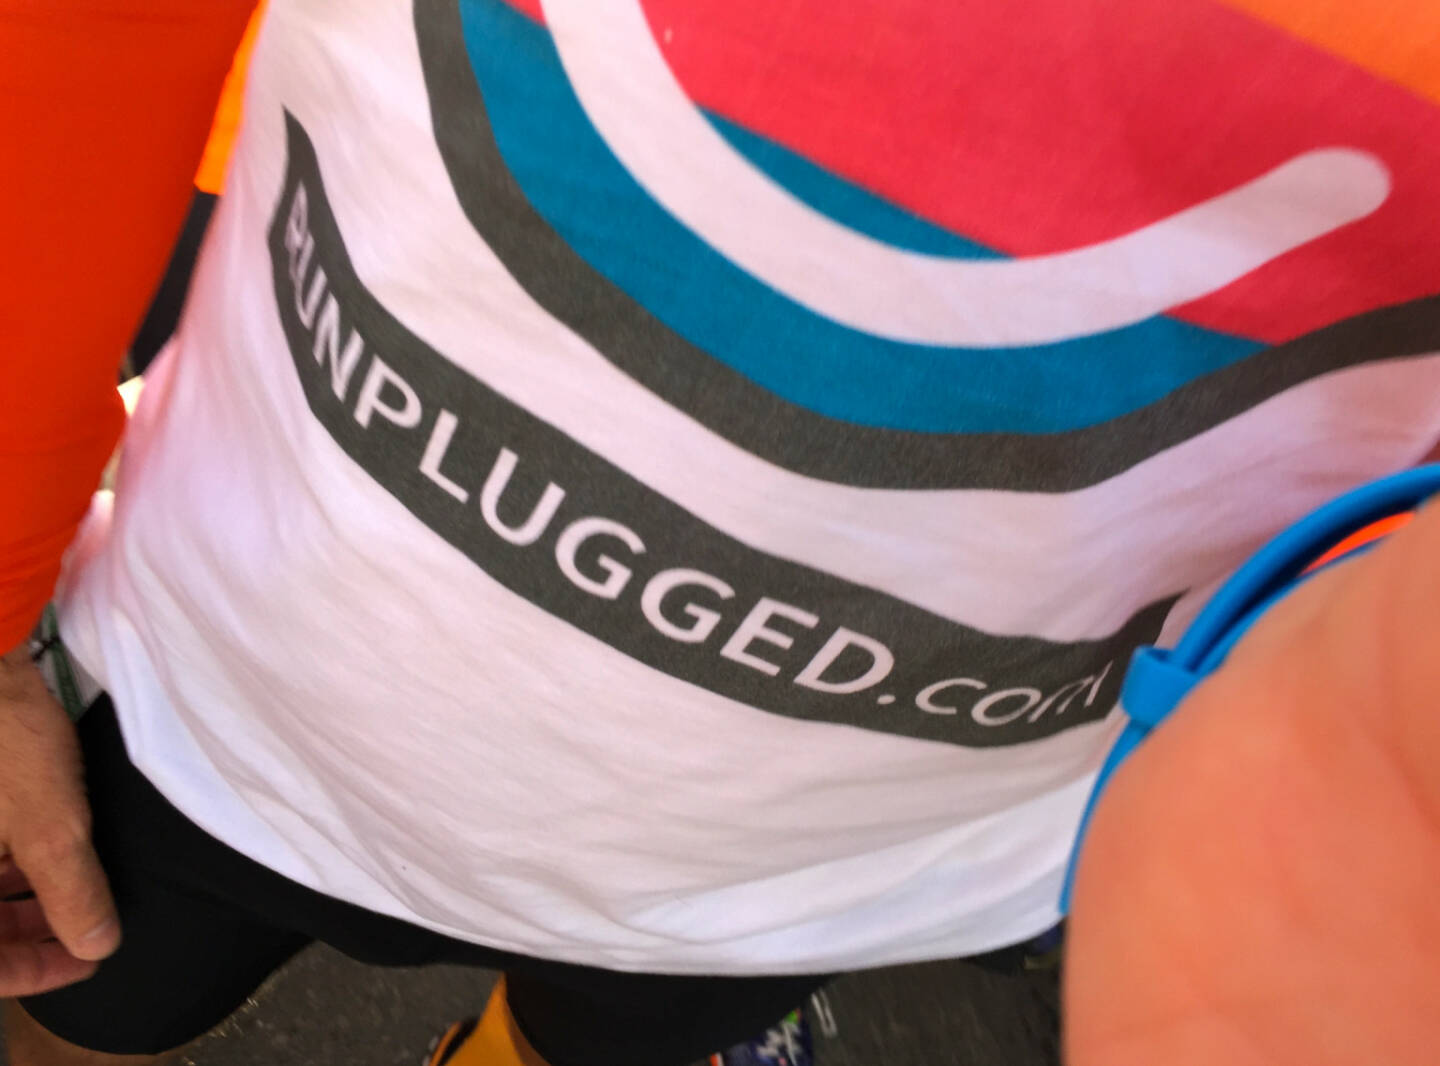 Runplugged.com